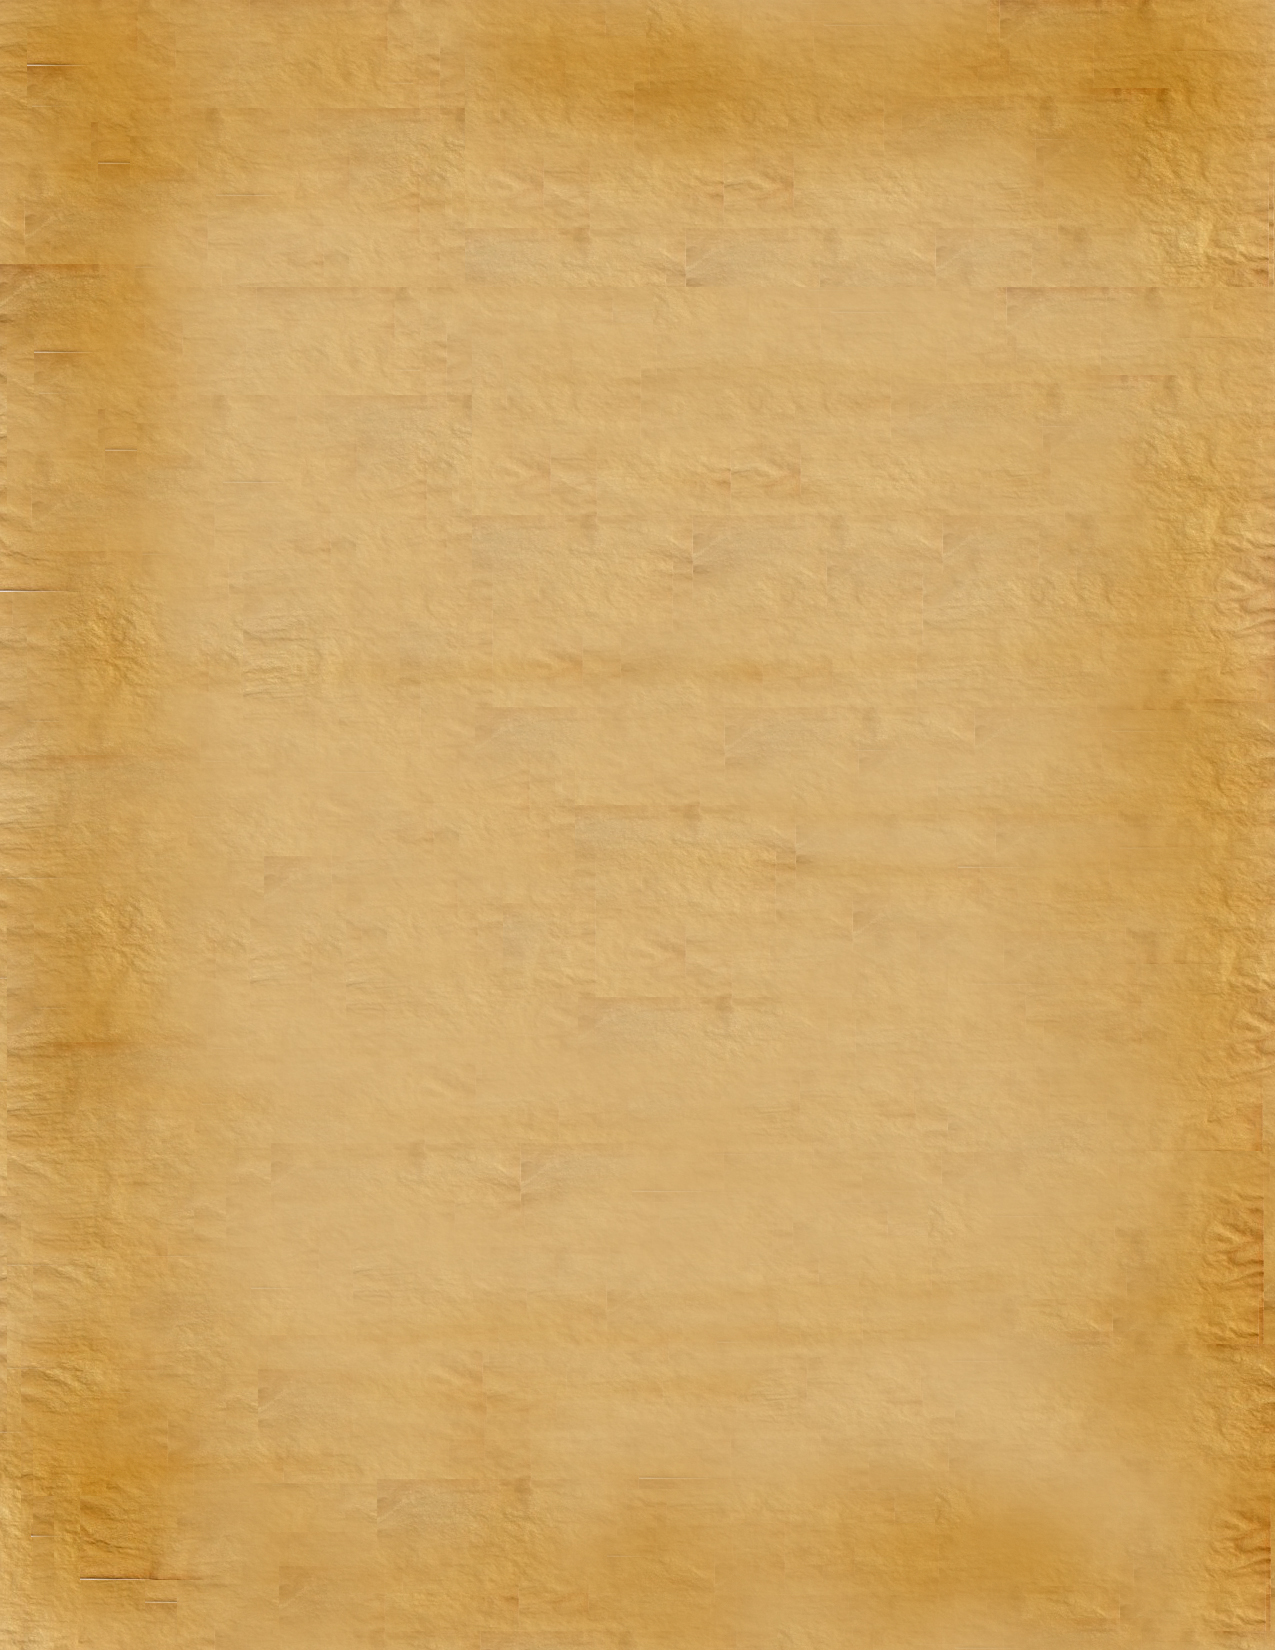 Parchment_Paper_Texture_by_sinnedaria